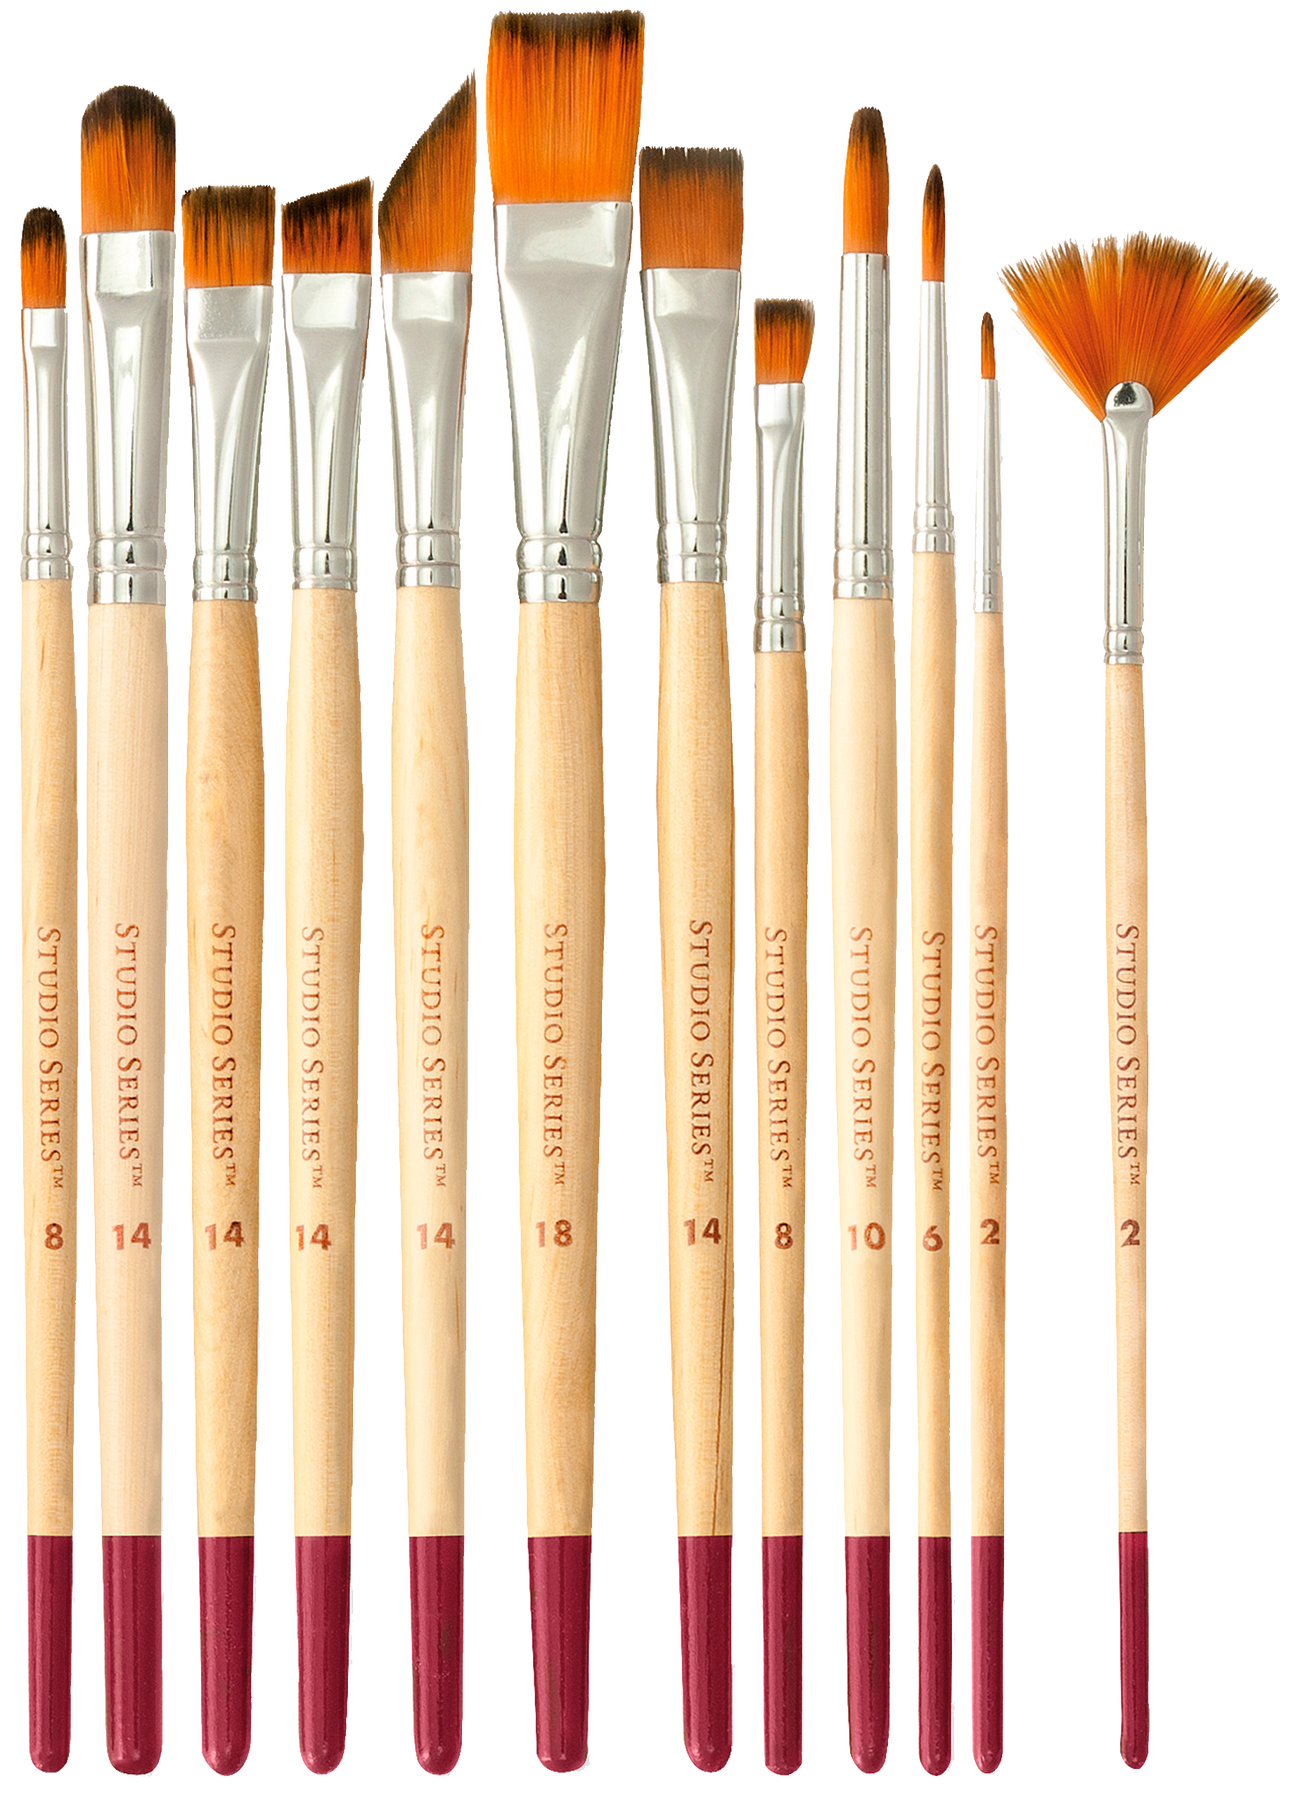 Studio Srs Artist's Paintbrush Set (Other)